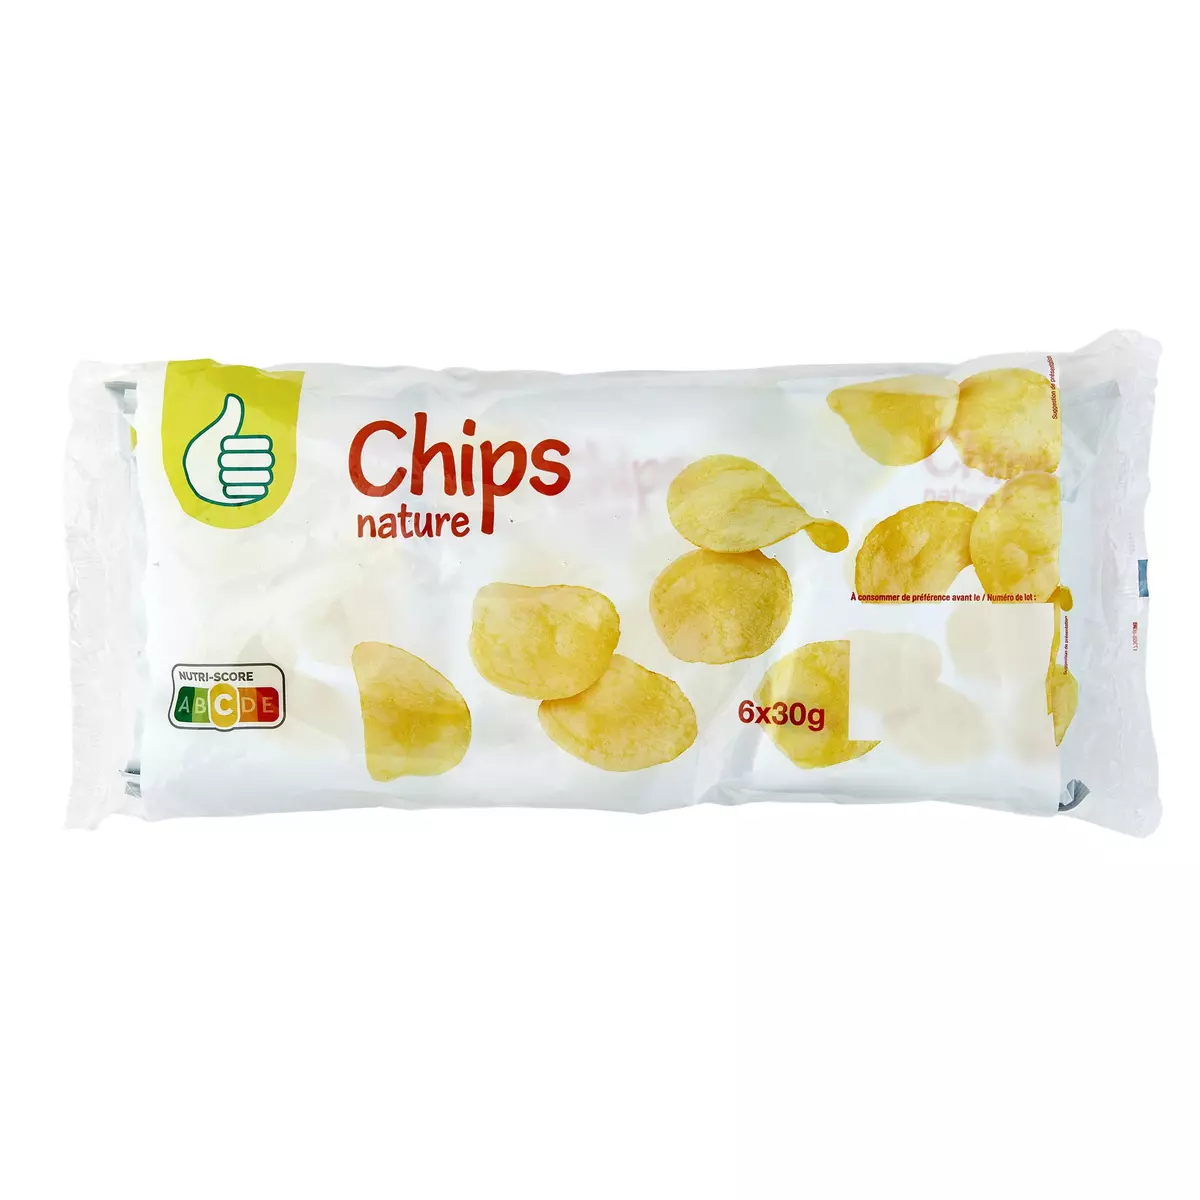 POUCE Chips nature sachets individuels 6 sachets 6x30g